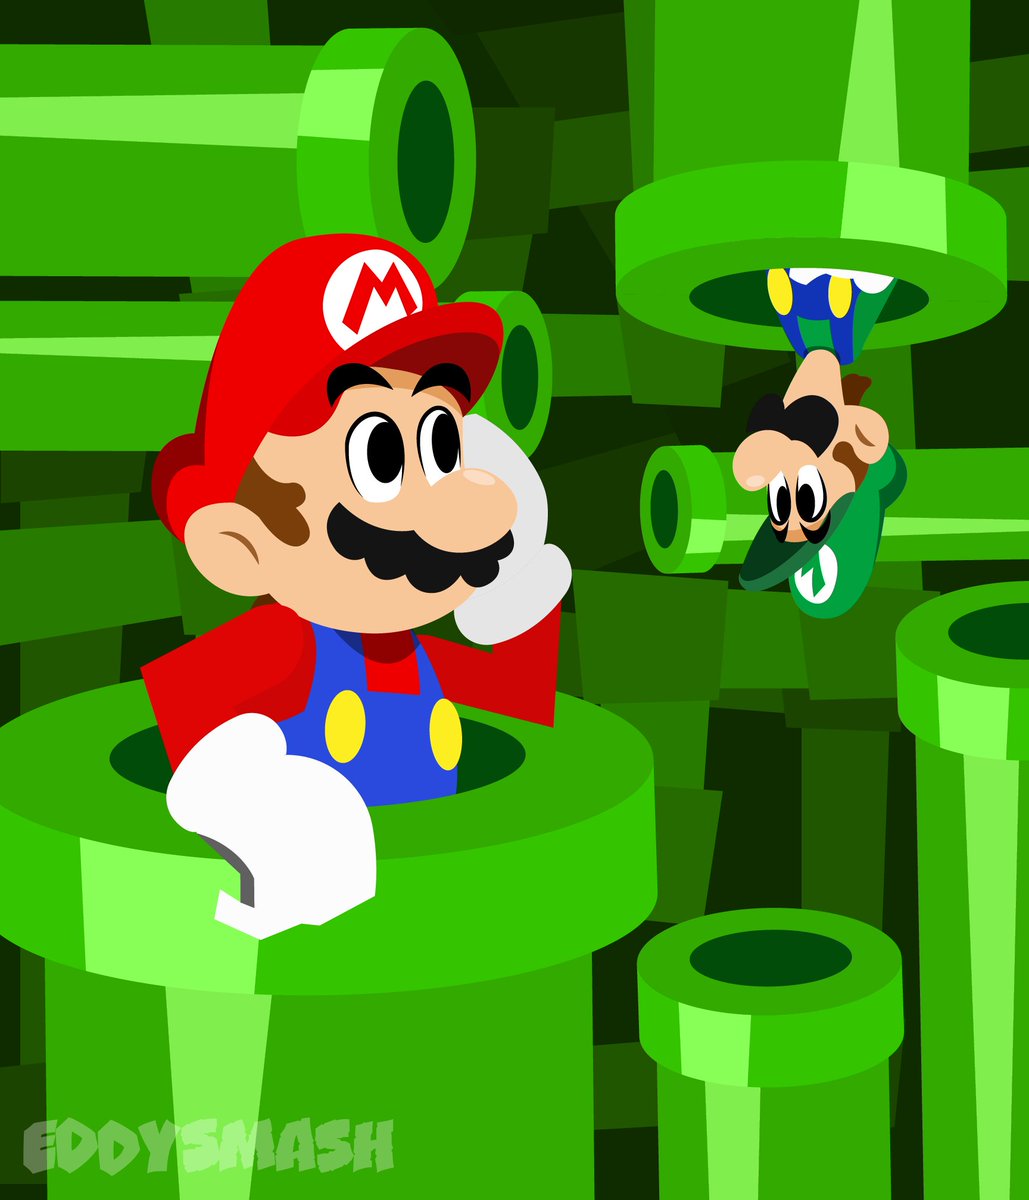 The Bros in the Pipe Maze 🍄💫
(Super Mario Bros.)

#Mario #Luigi #SuperMario #SuperMarioBros